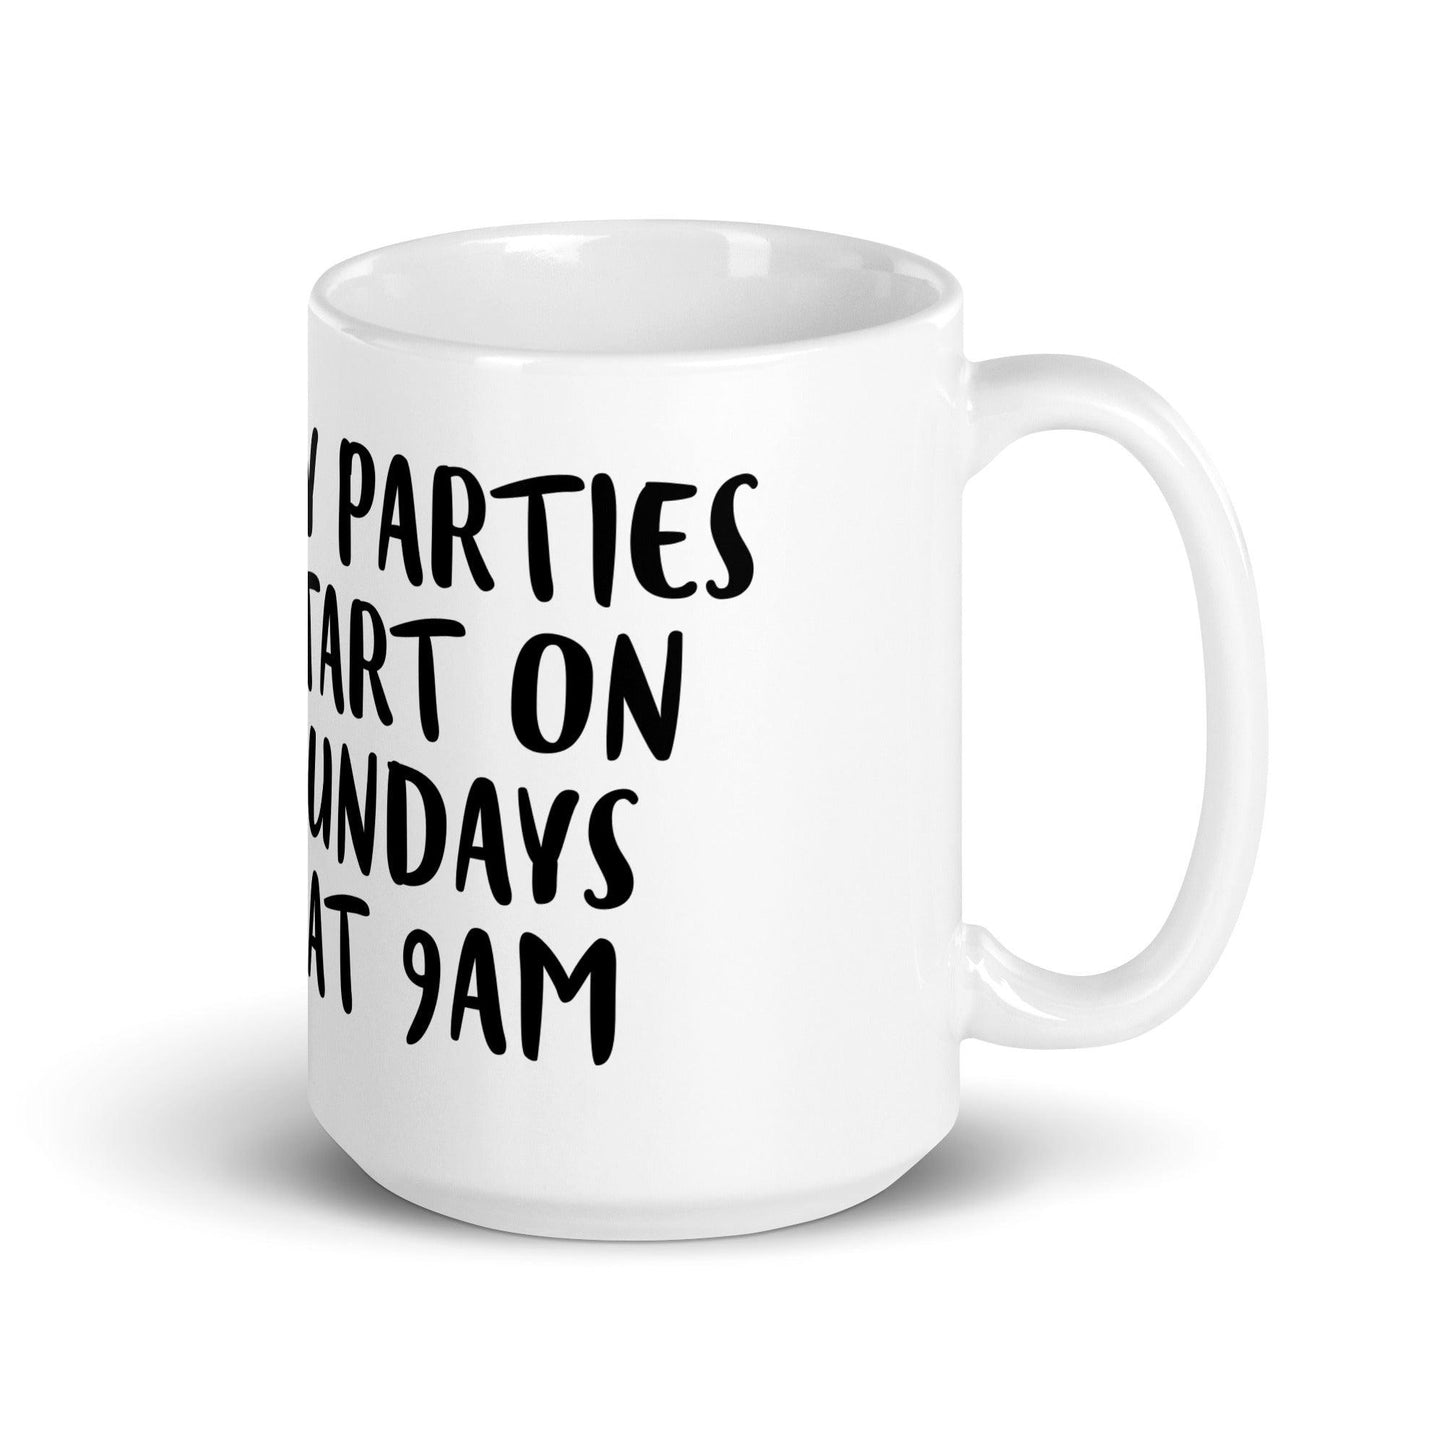 My parties start on Sundays at 9AM - White glossy mug - CatsOnDrugs